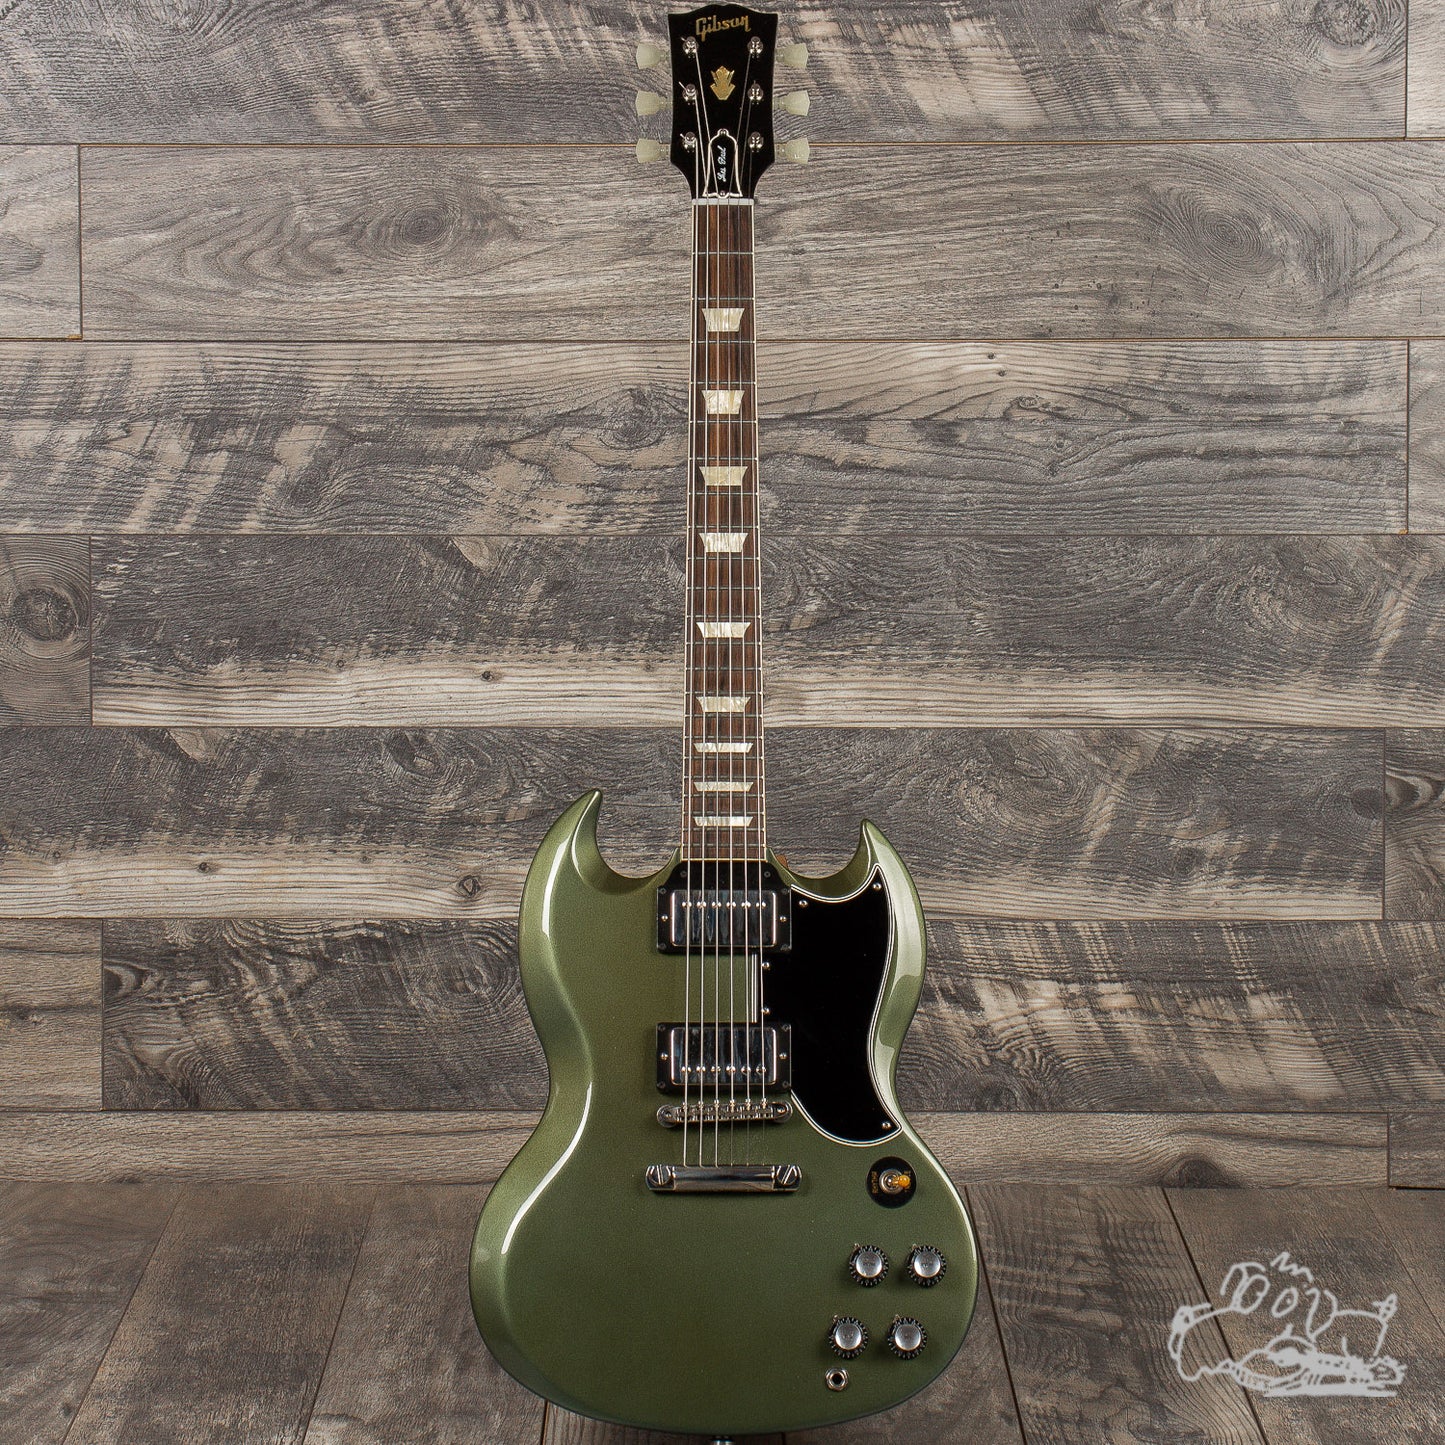 2014 Gibson Custom Shop '61 SG Verdoro Green, Wildwood Spec - Make Us An Offer